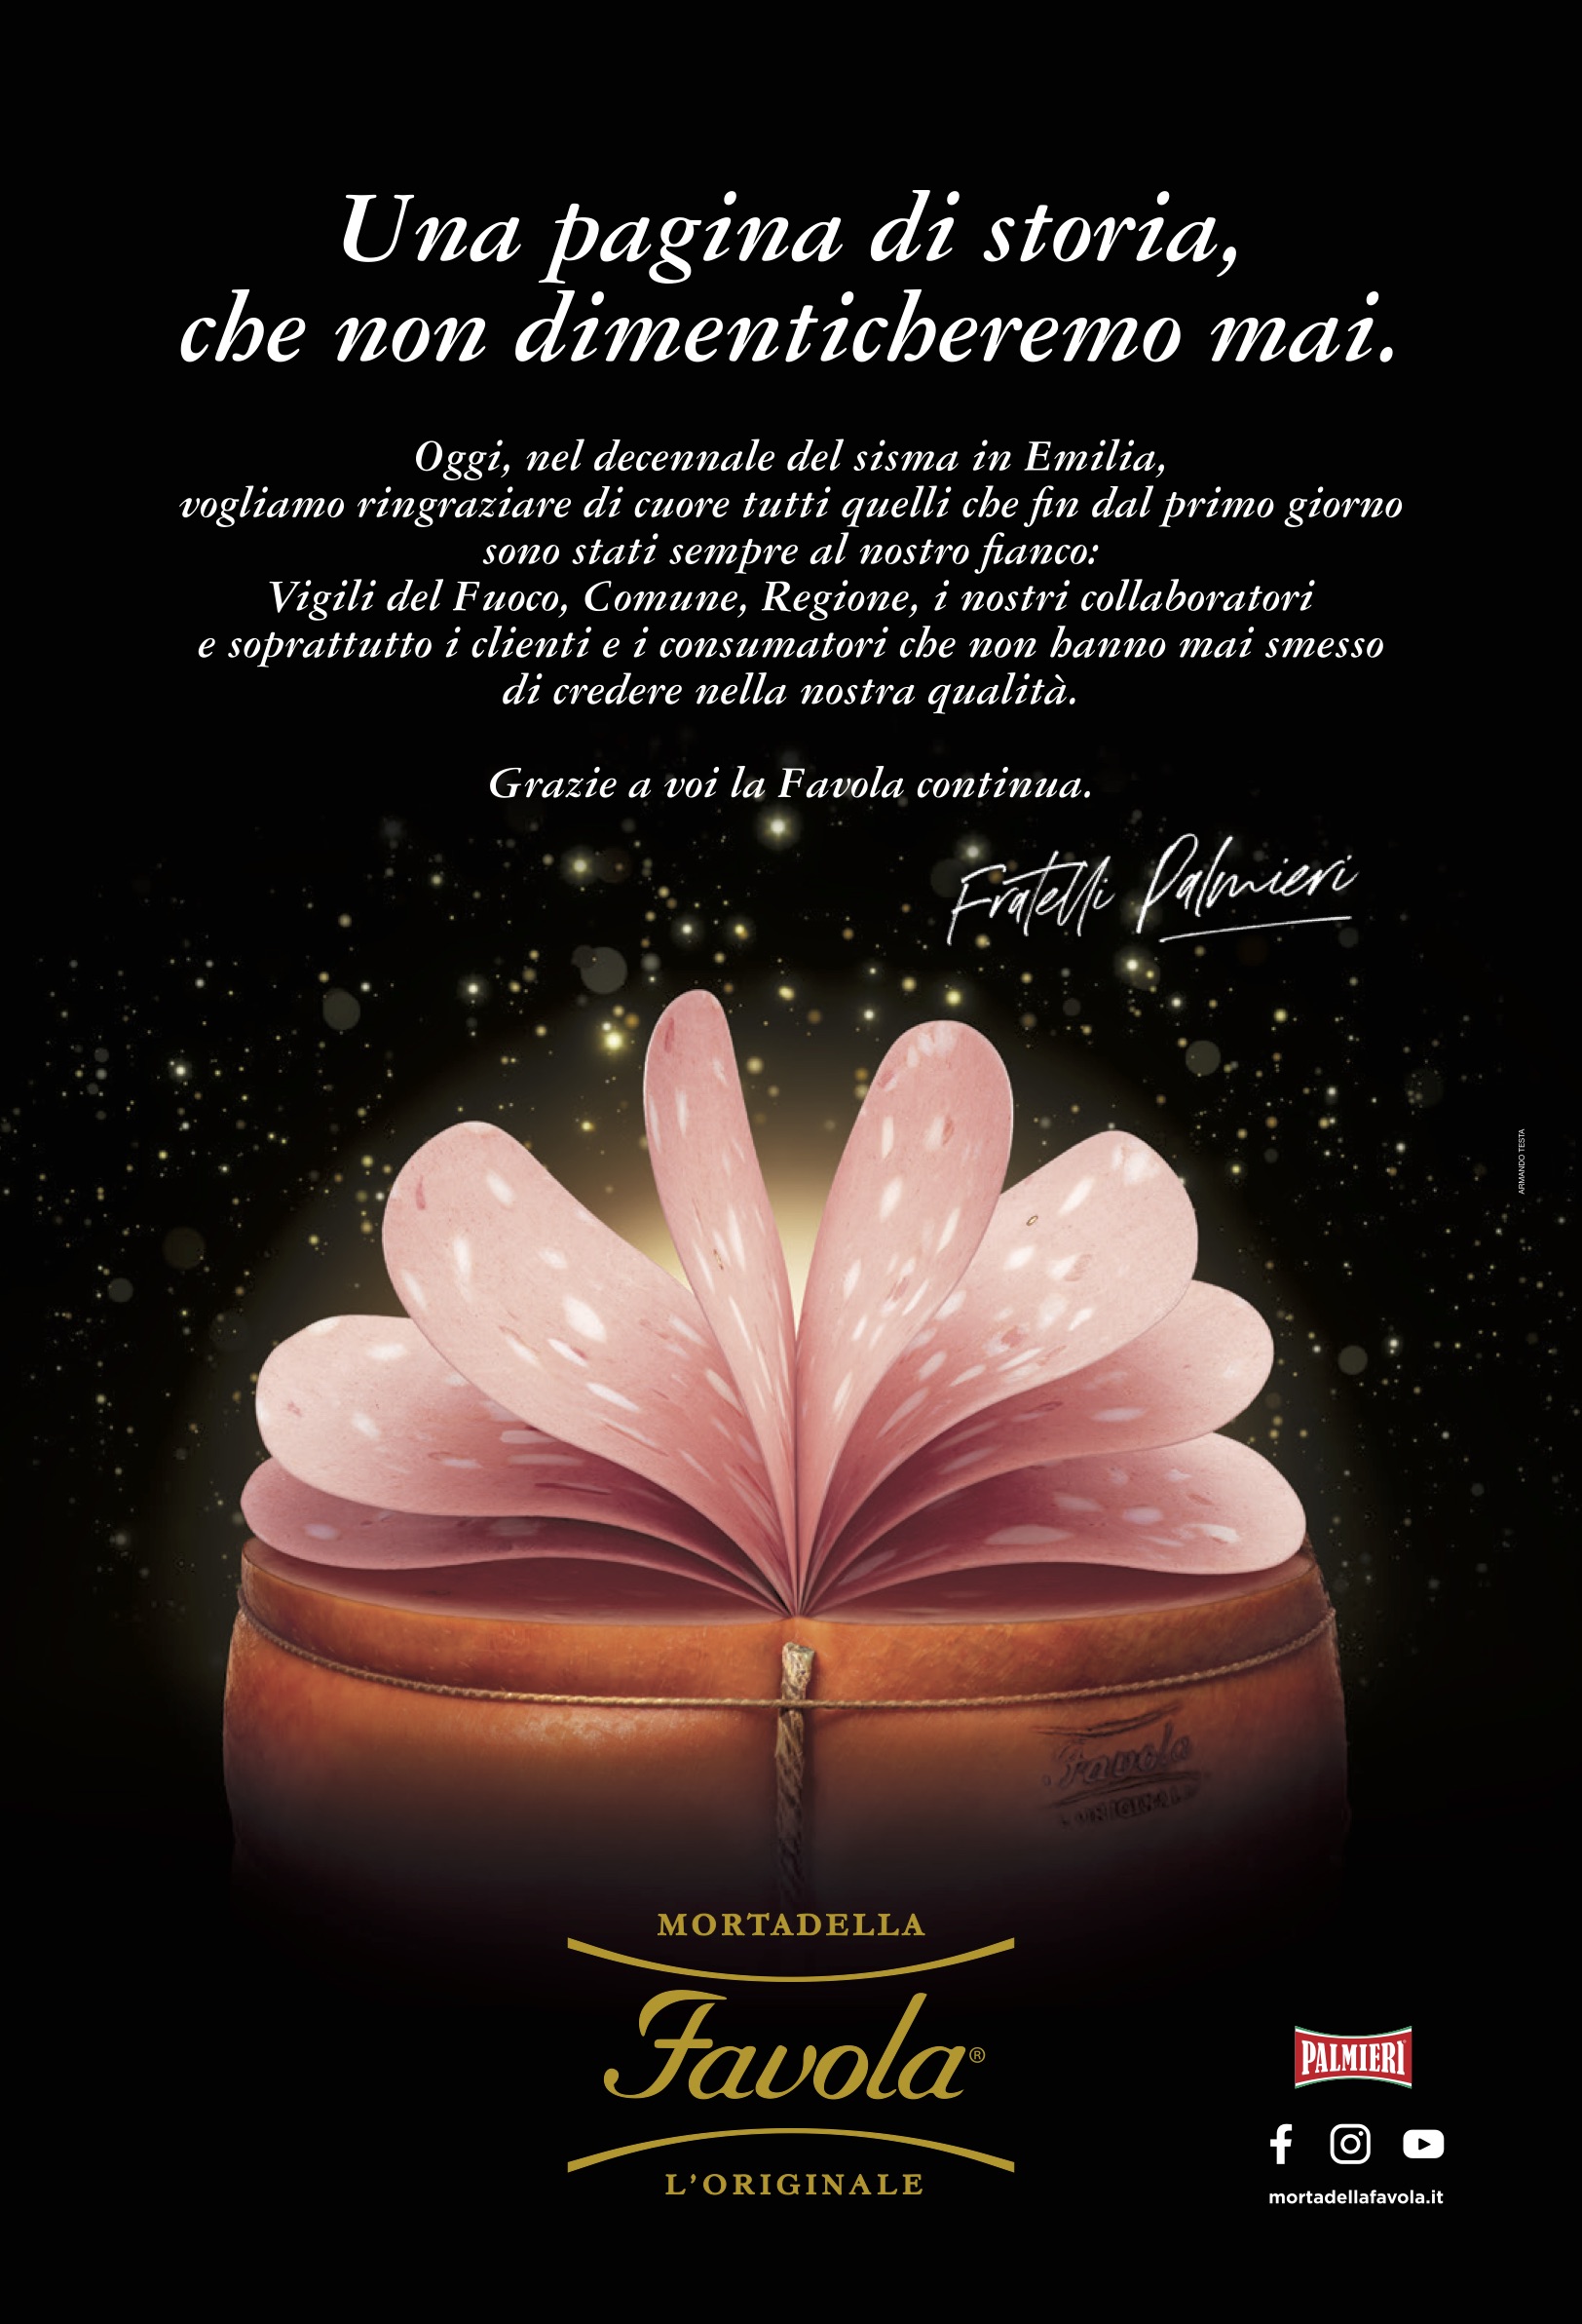 Mortadella Favola and Armando Testa Torino: a special dedication, on a special date.